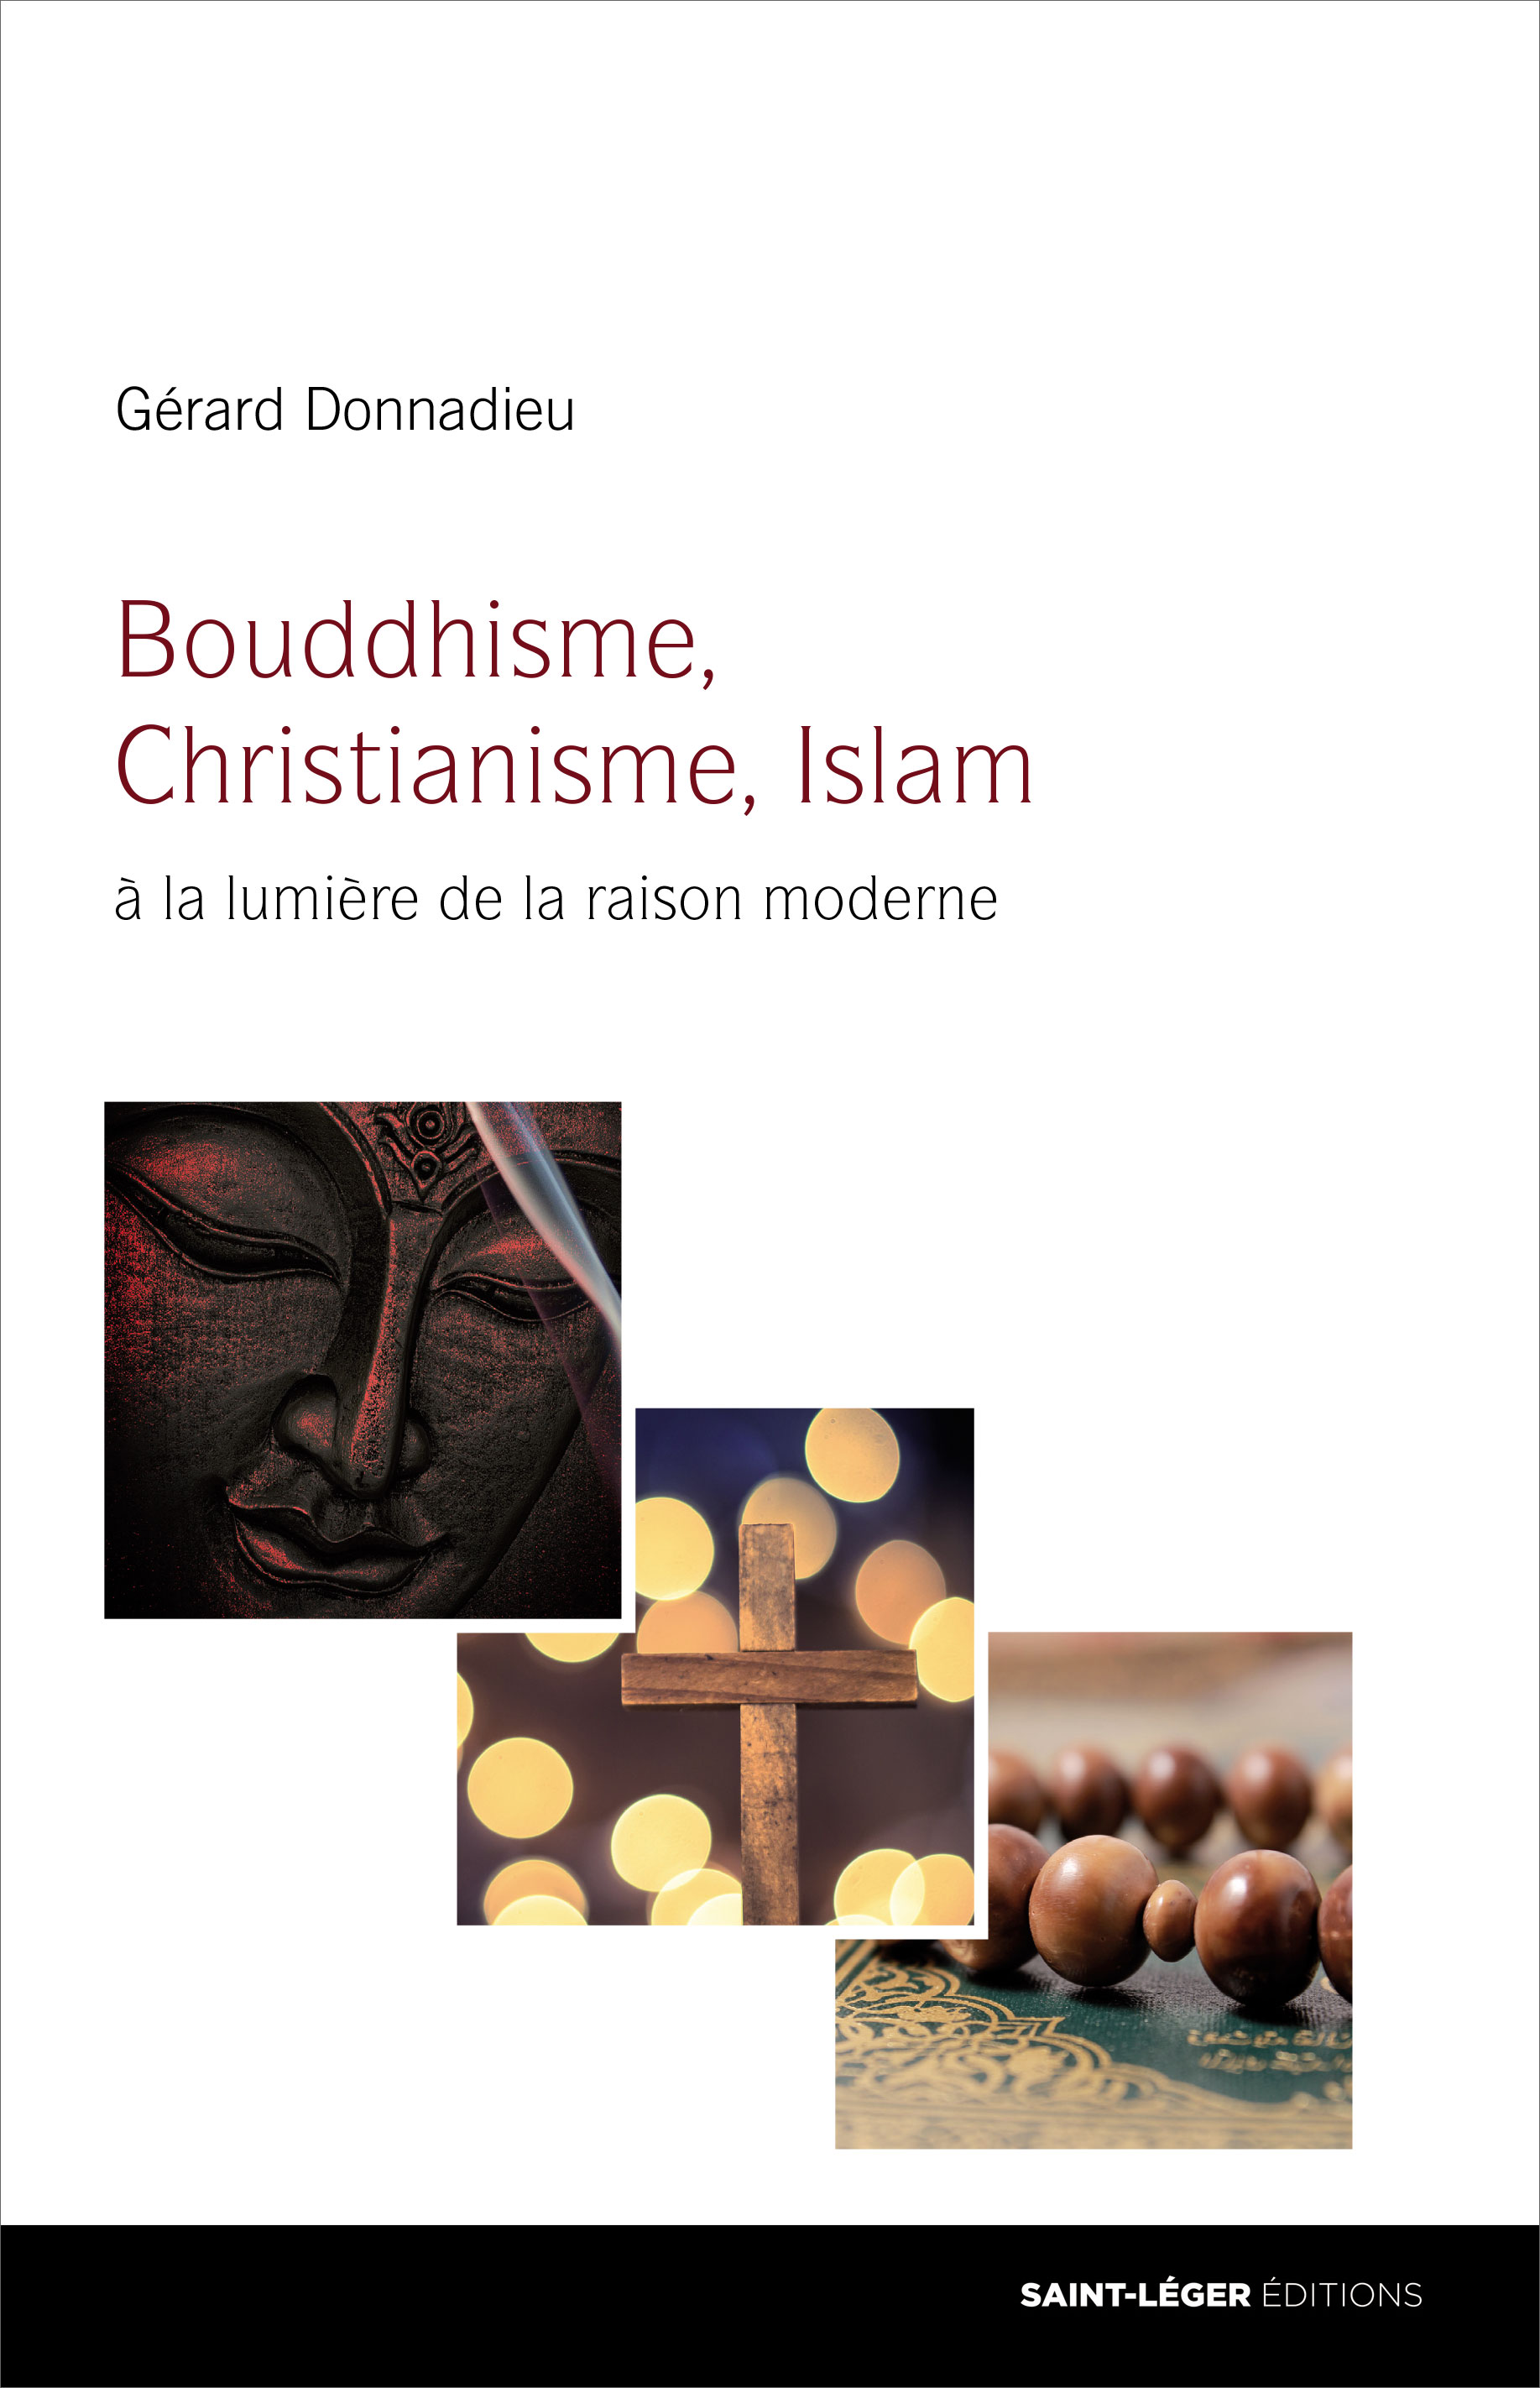 Grard Donnadieu, Bouddhisme, Christianisme, Islam